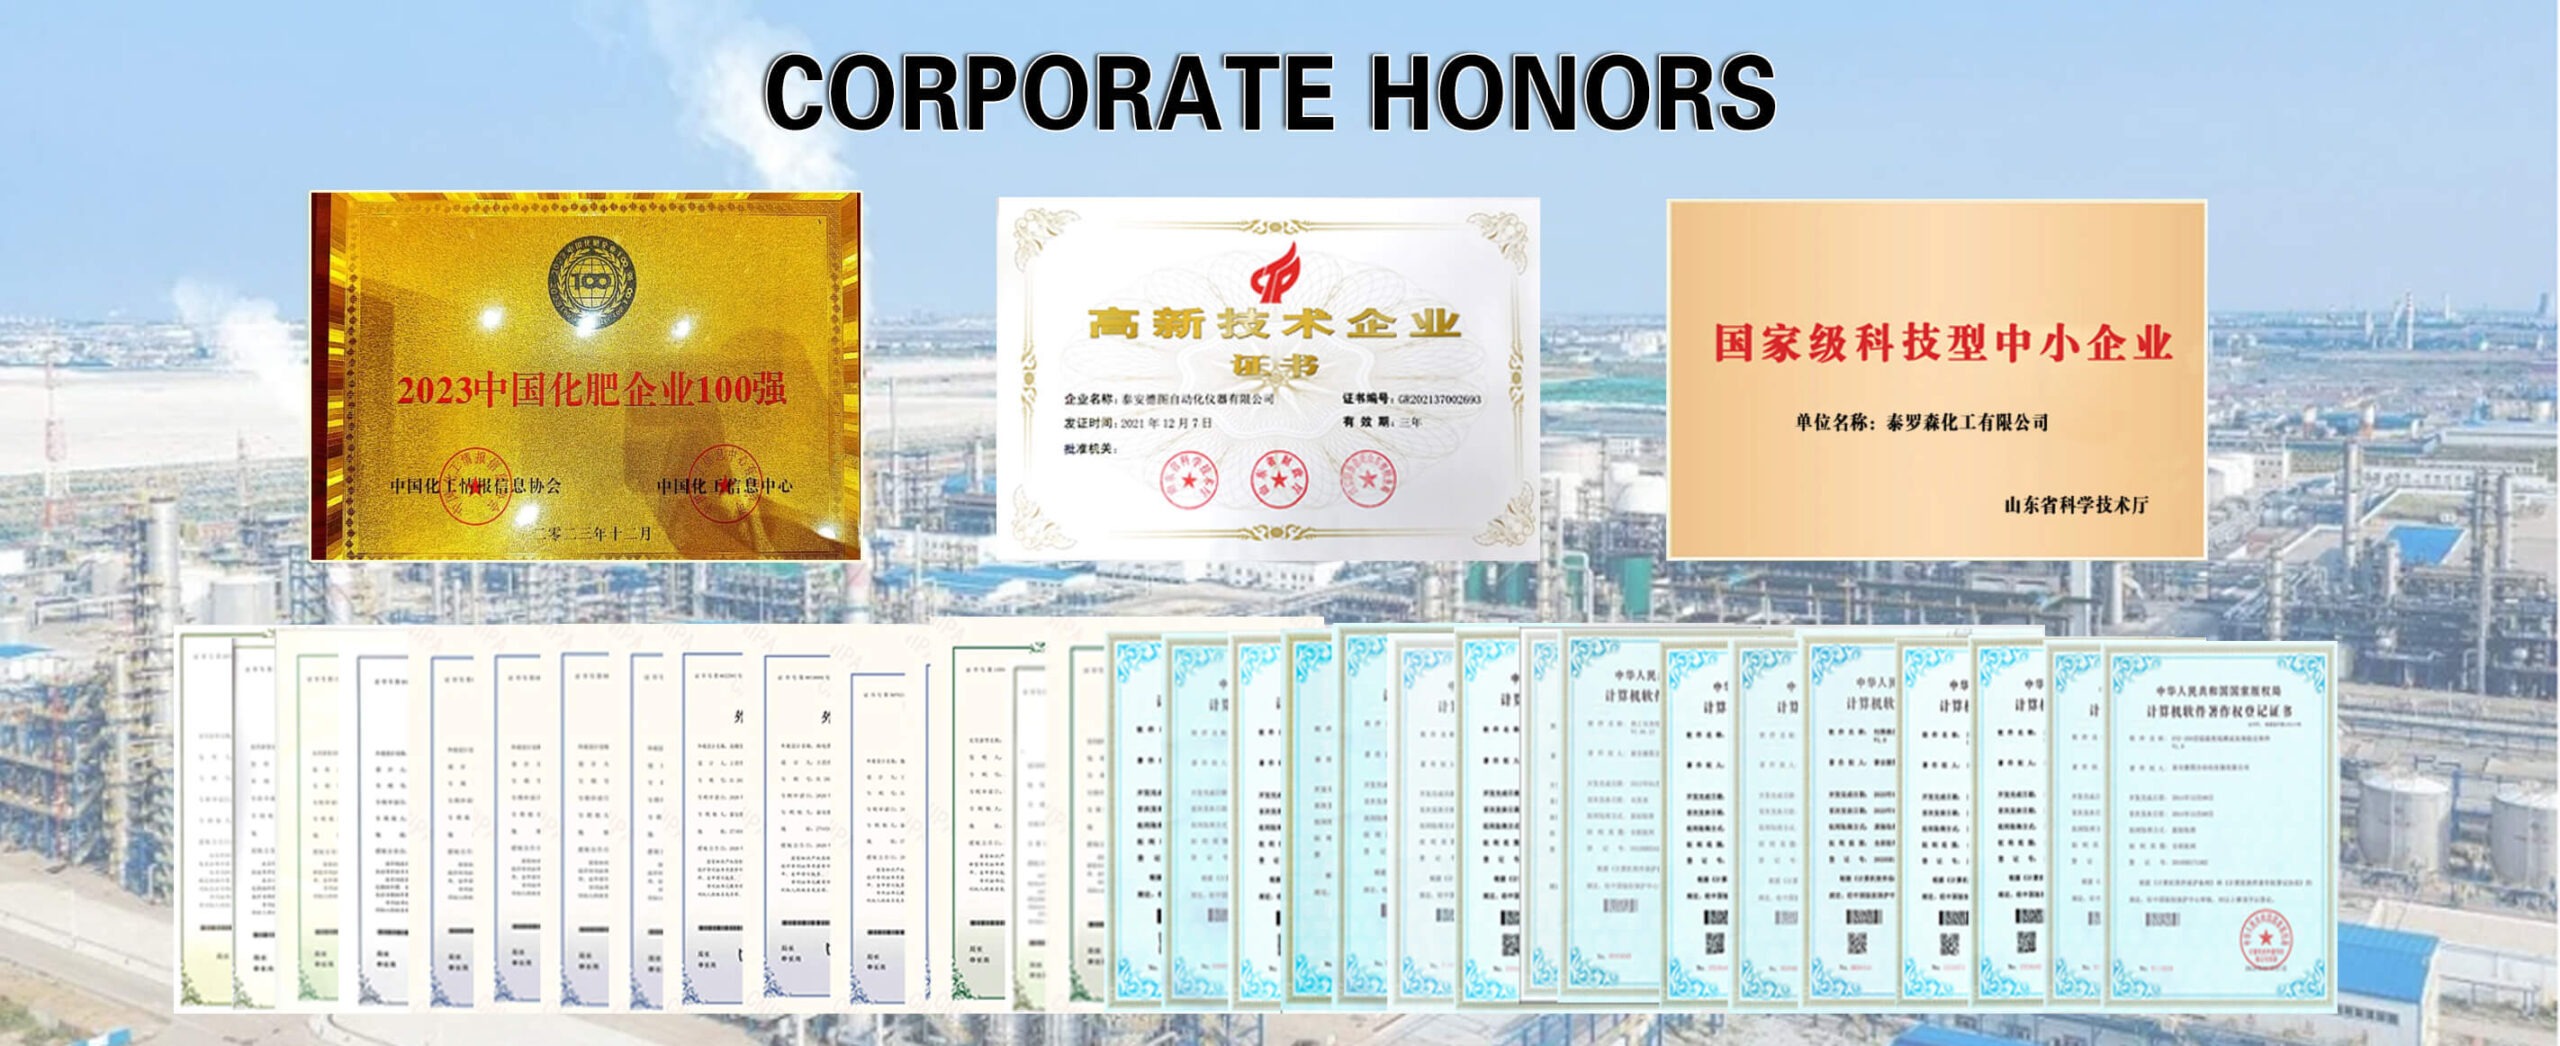 Corporate Honors